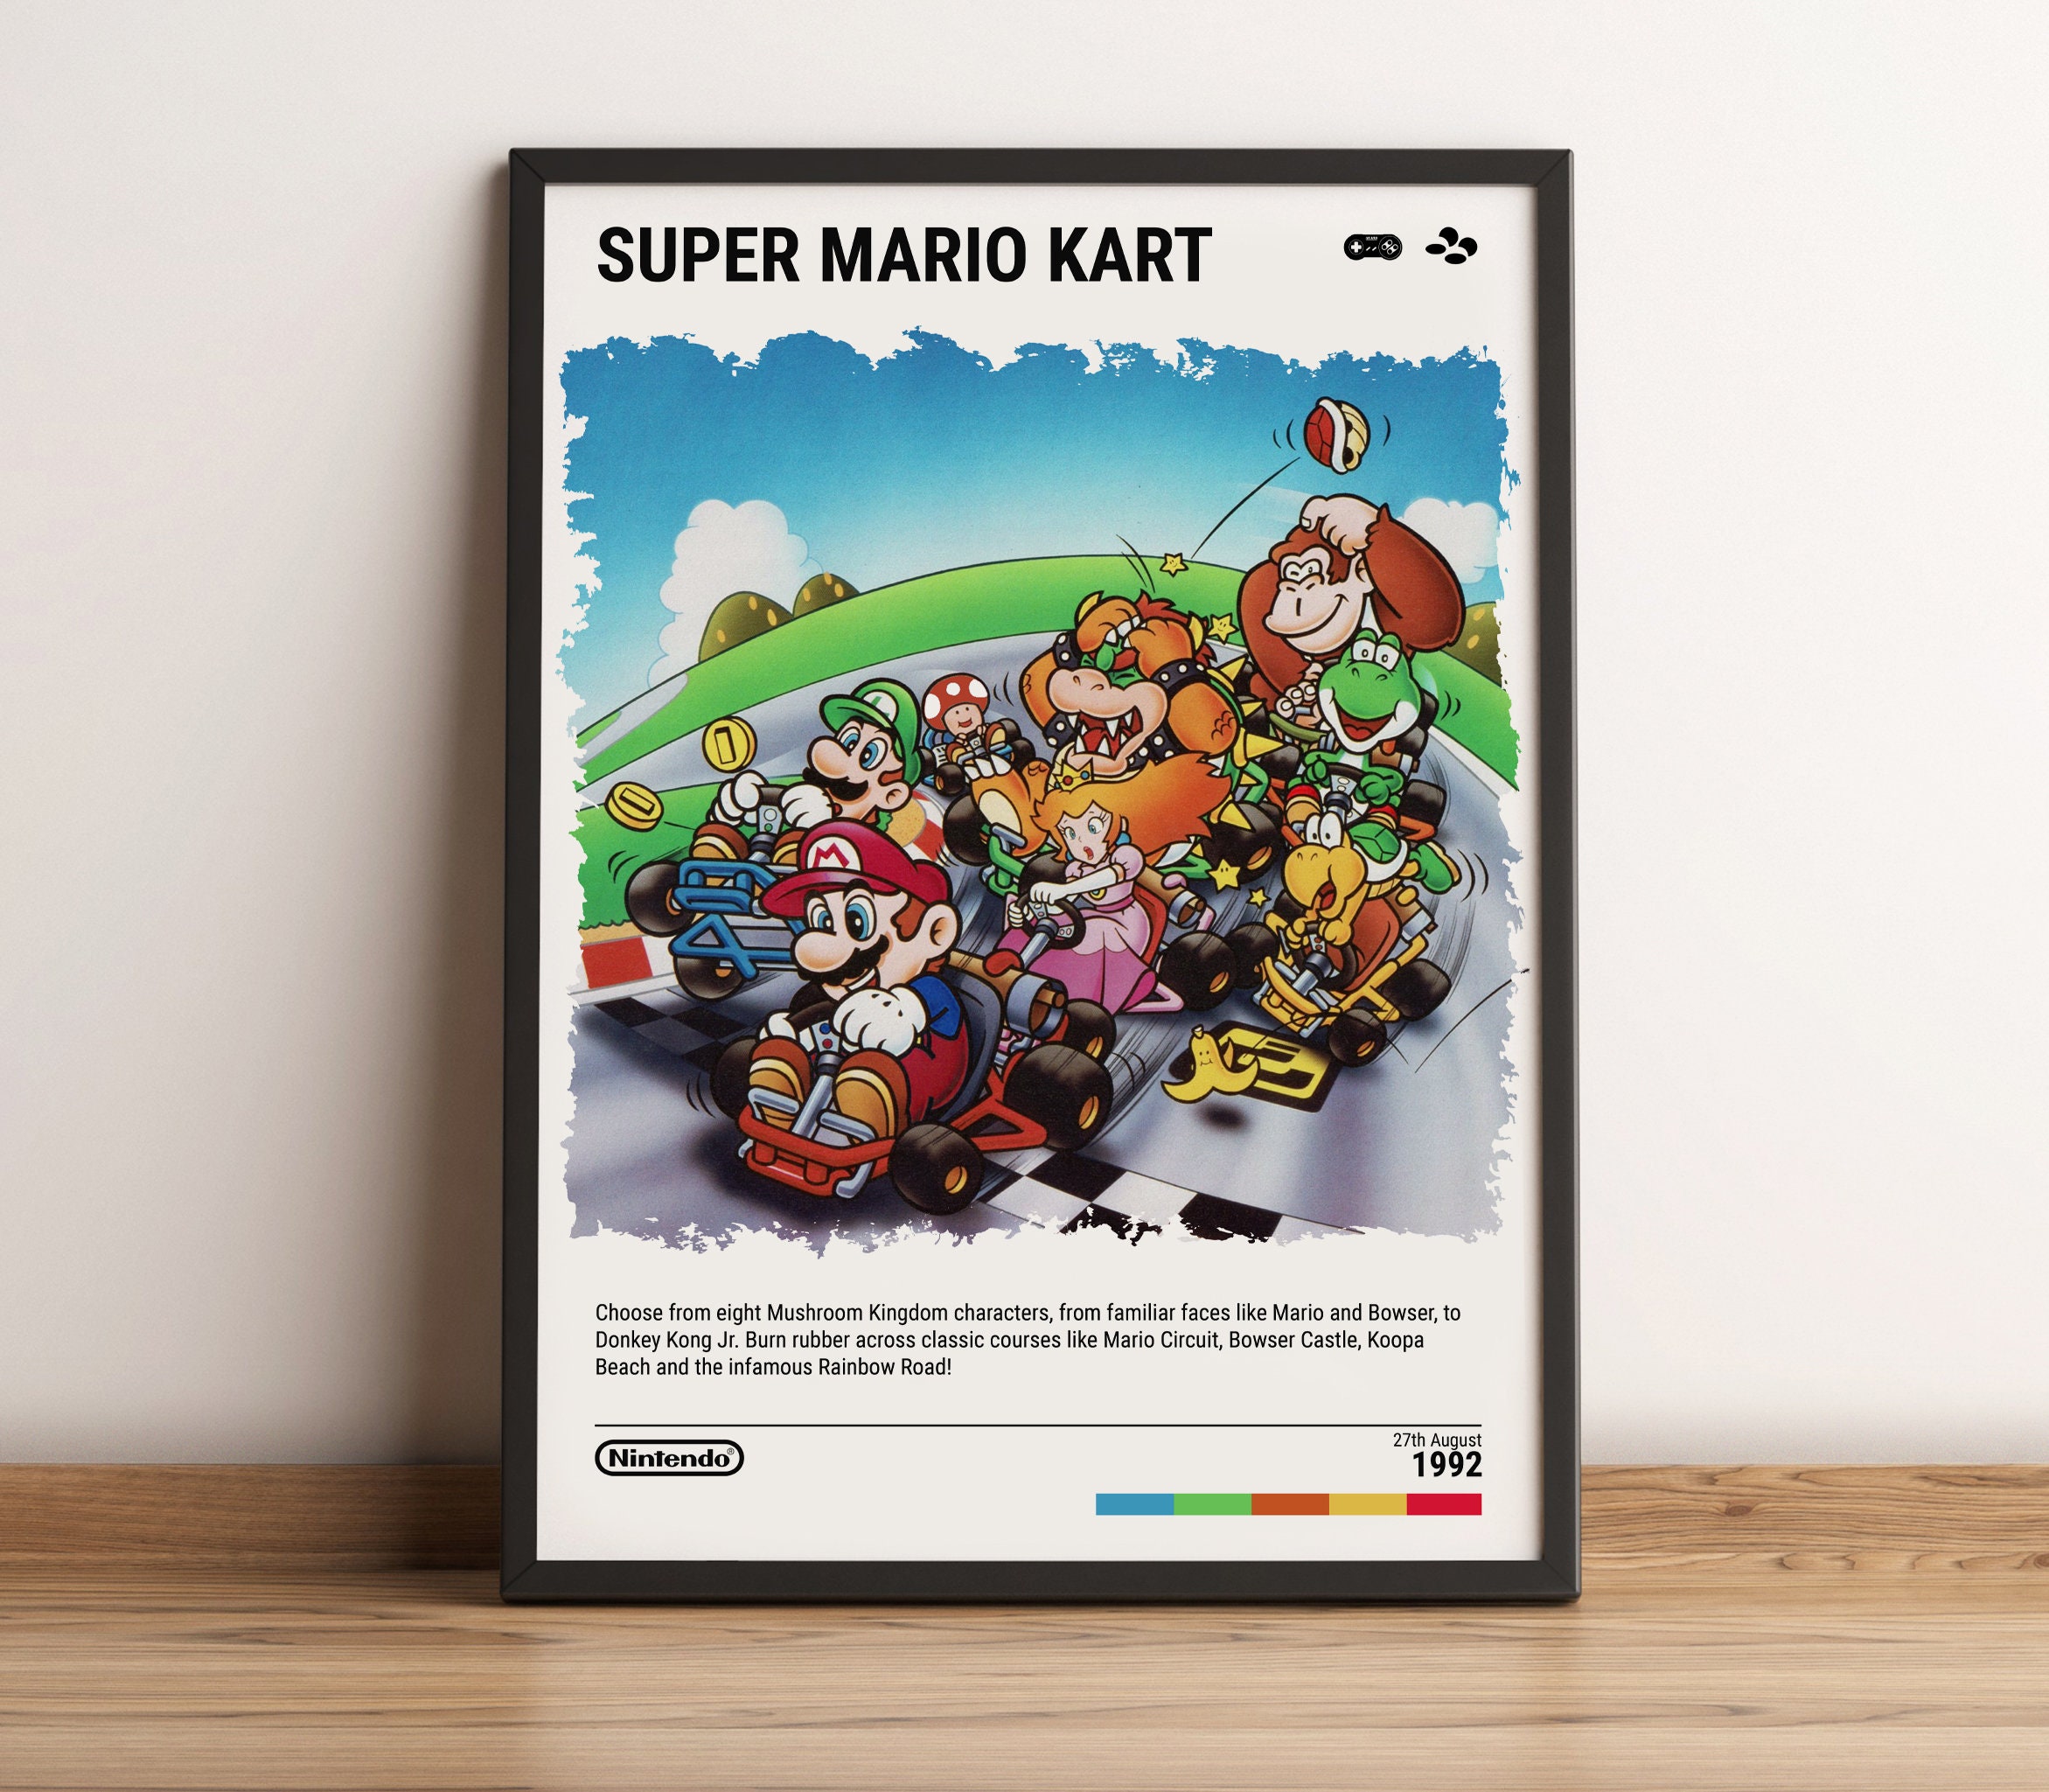 Super Mario Kart Super Nintendo SNES Premium POSTER MADE IN USA - NVG098